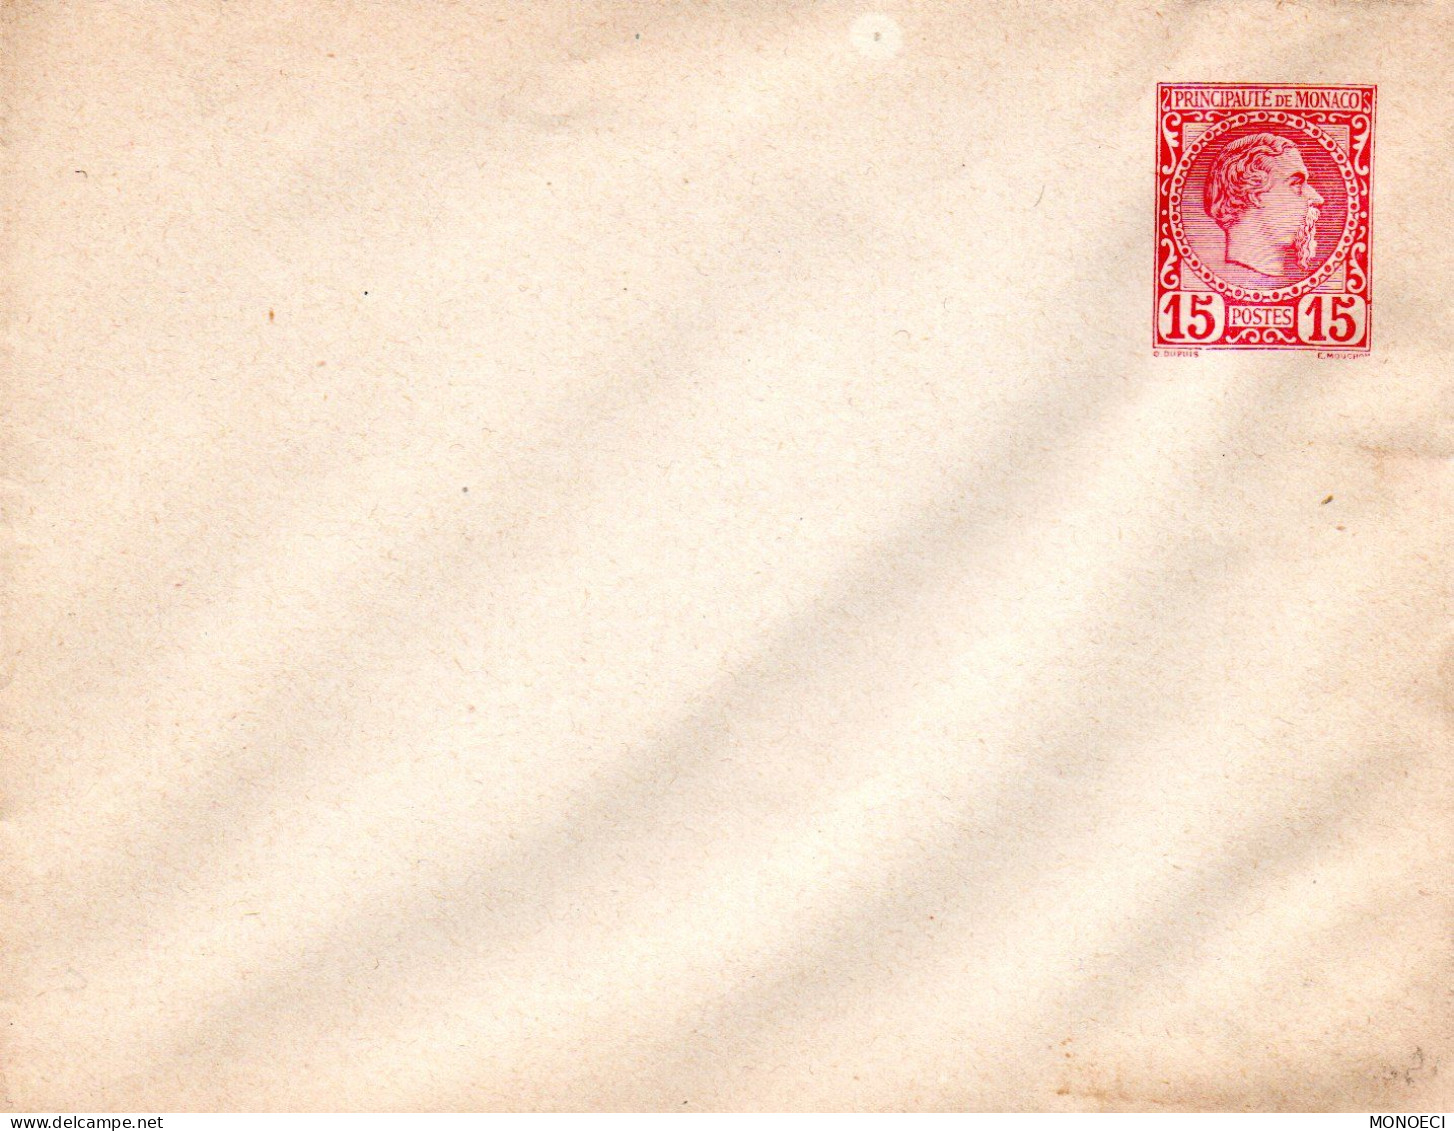 MONACO -- MONTE CARLO -- ENTIER POSTAL -- Enveloppe -- 15 C. (1886) (123 X 96) Prince Charles III - Postal Stationery